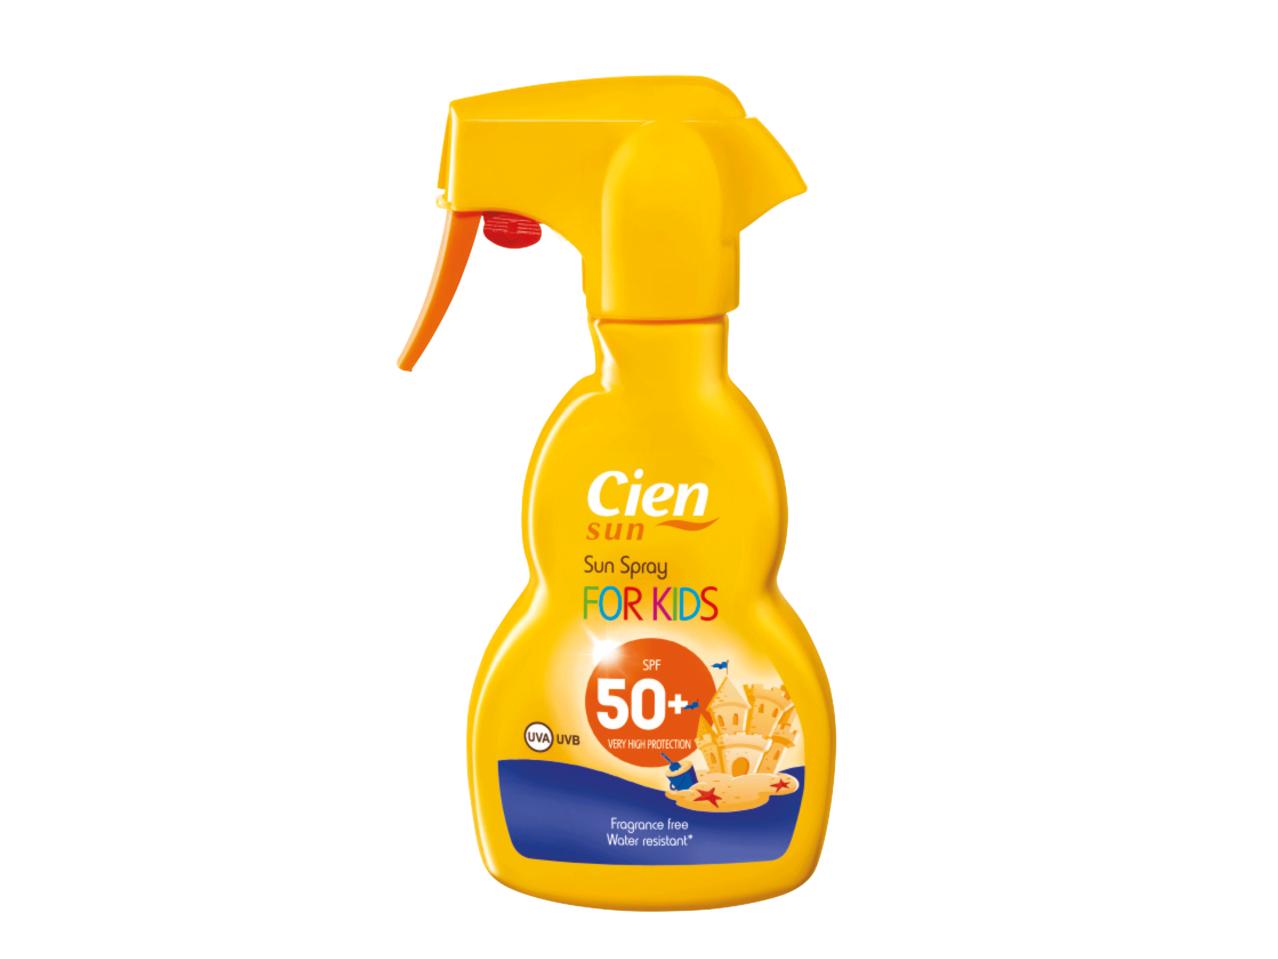 CIEN Sun Spray for Kids SPF 50